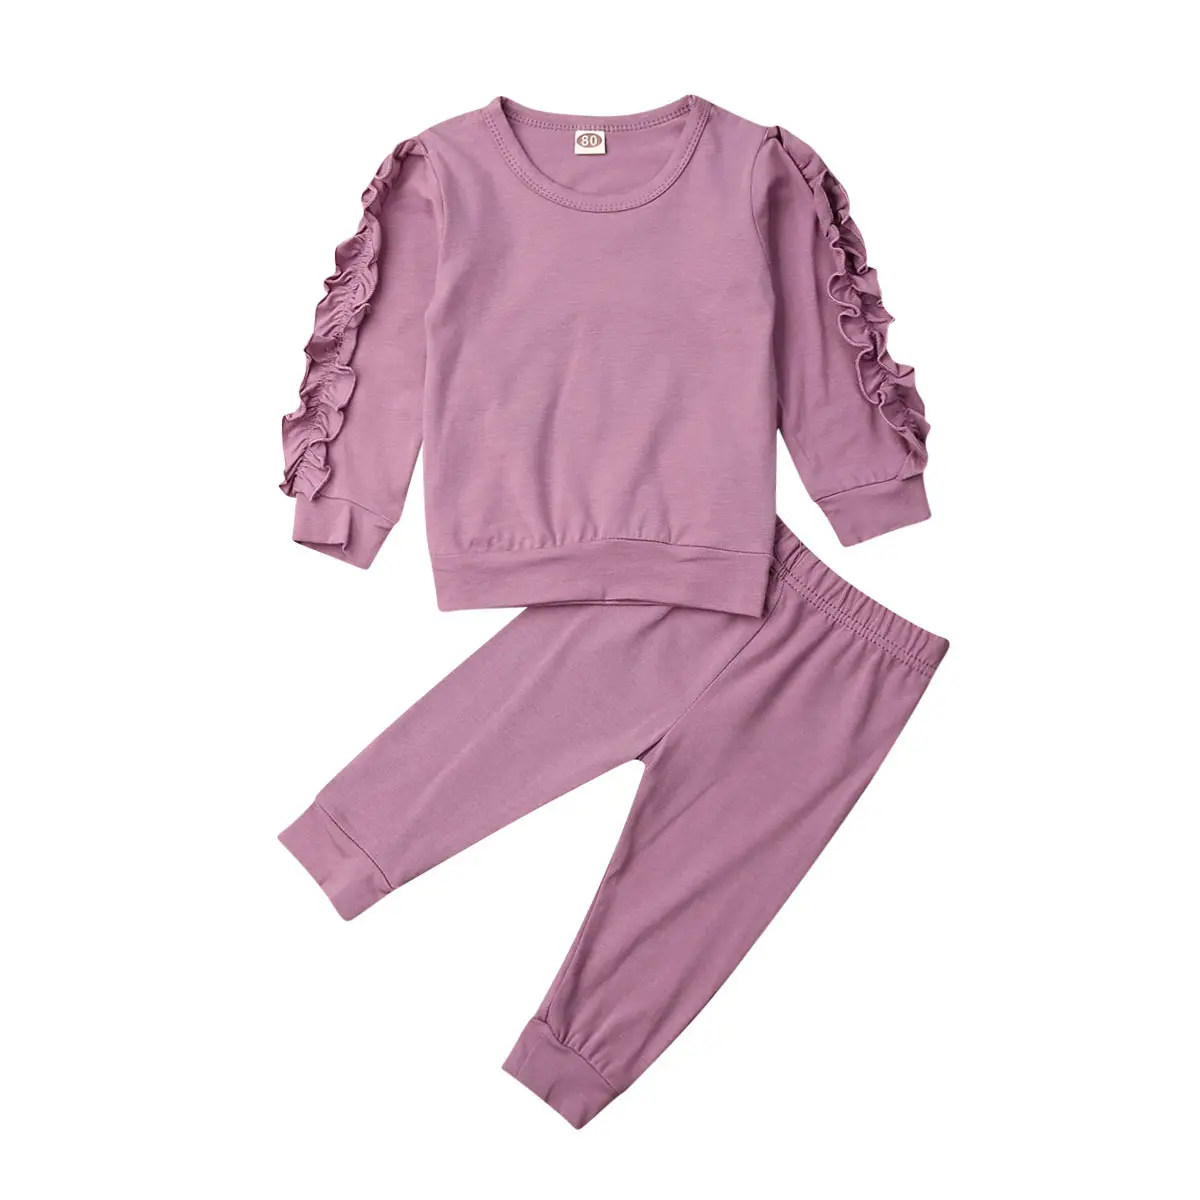 Neugeborene Herbst Winter Kleidung Baby Mädchen Rüschen Langarm T-Shirt Hosen 2Pcs Outfits Schlaf Kleidung Set